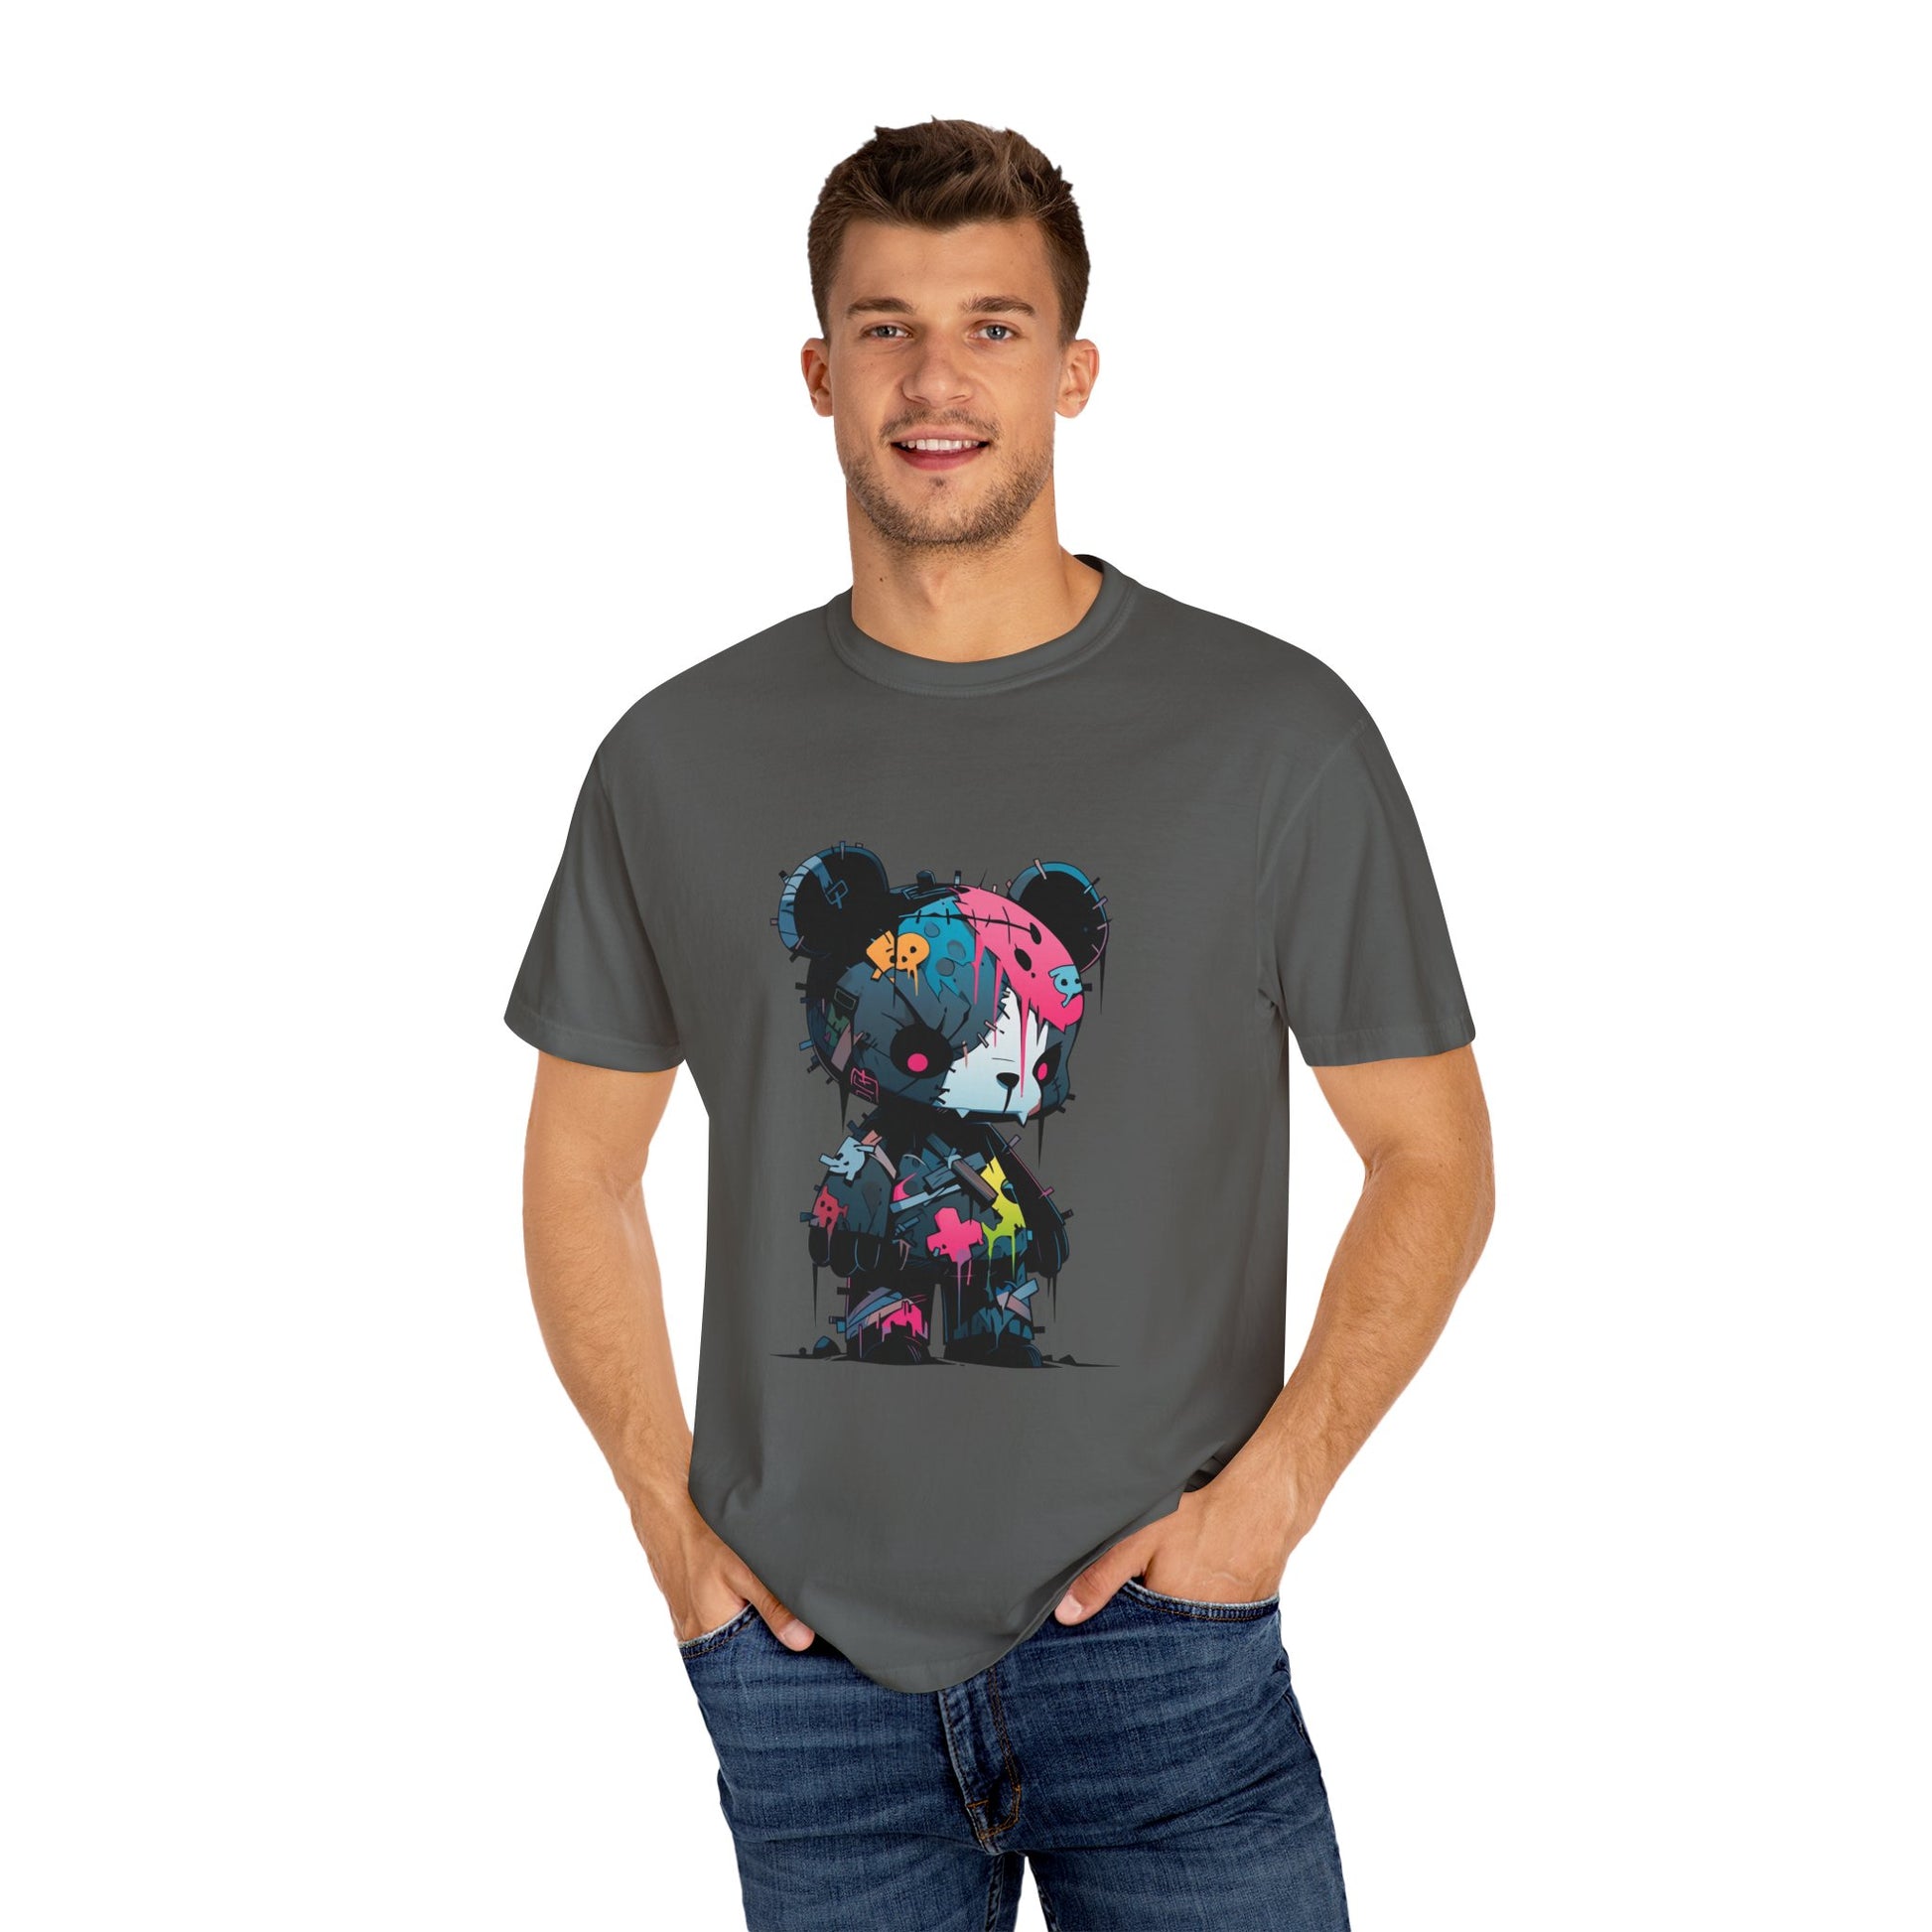 Hip Hop Teddy Bear Graphic Unisex Garment-dyed T-shirt Cotton Funny Humorous Graphic Soft Premium Unisex Men Women Pepper T-shirt Birthday Gift-51